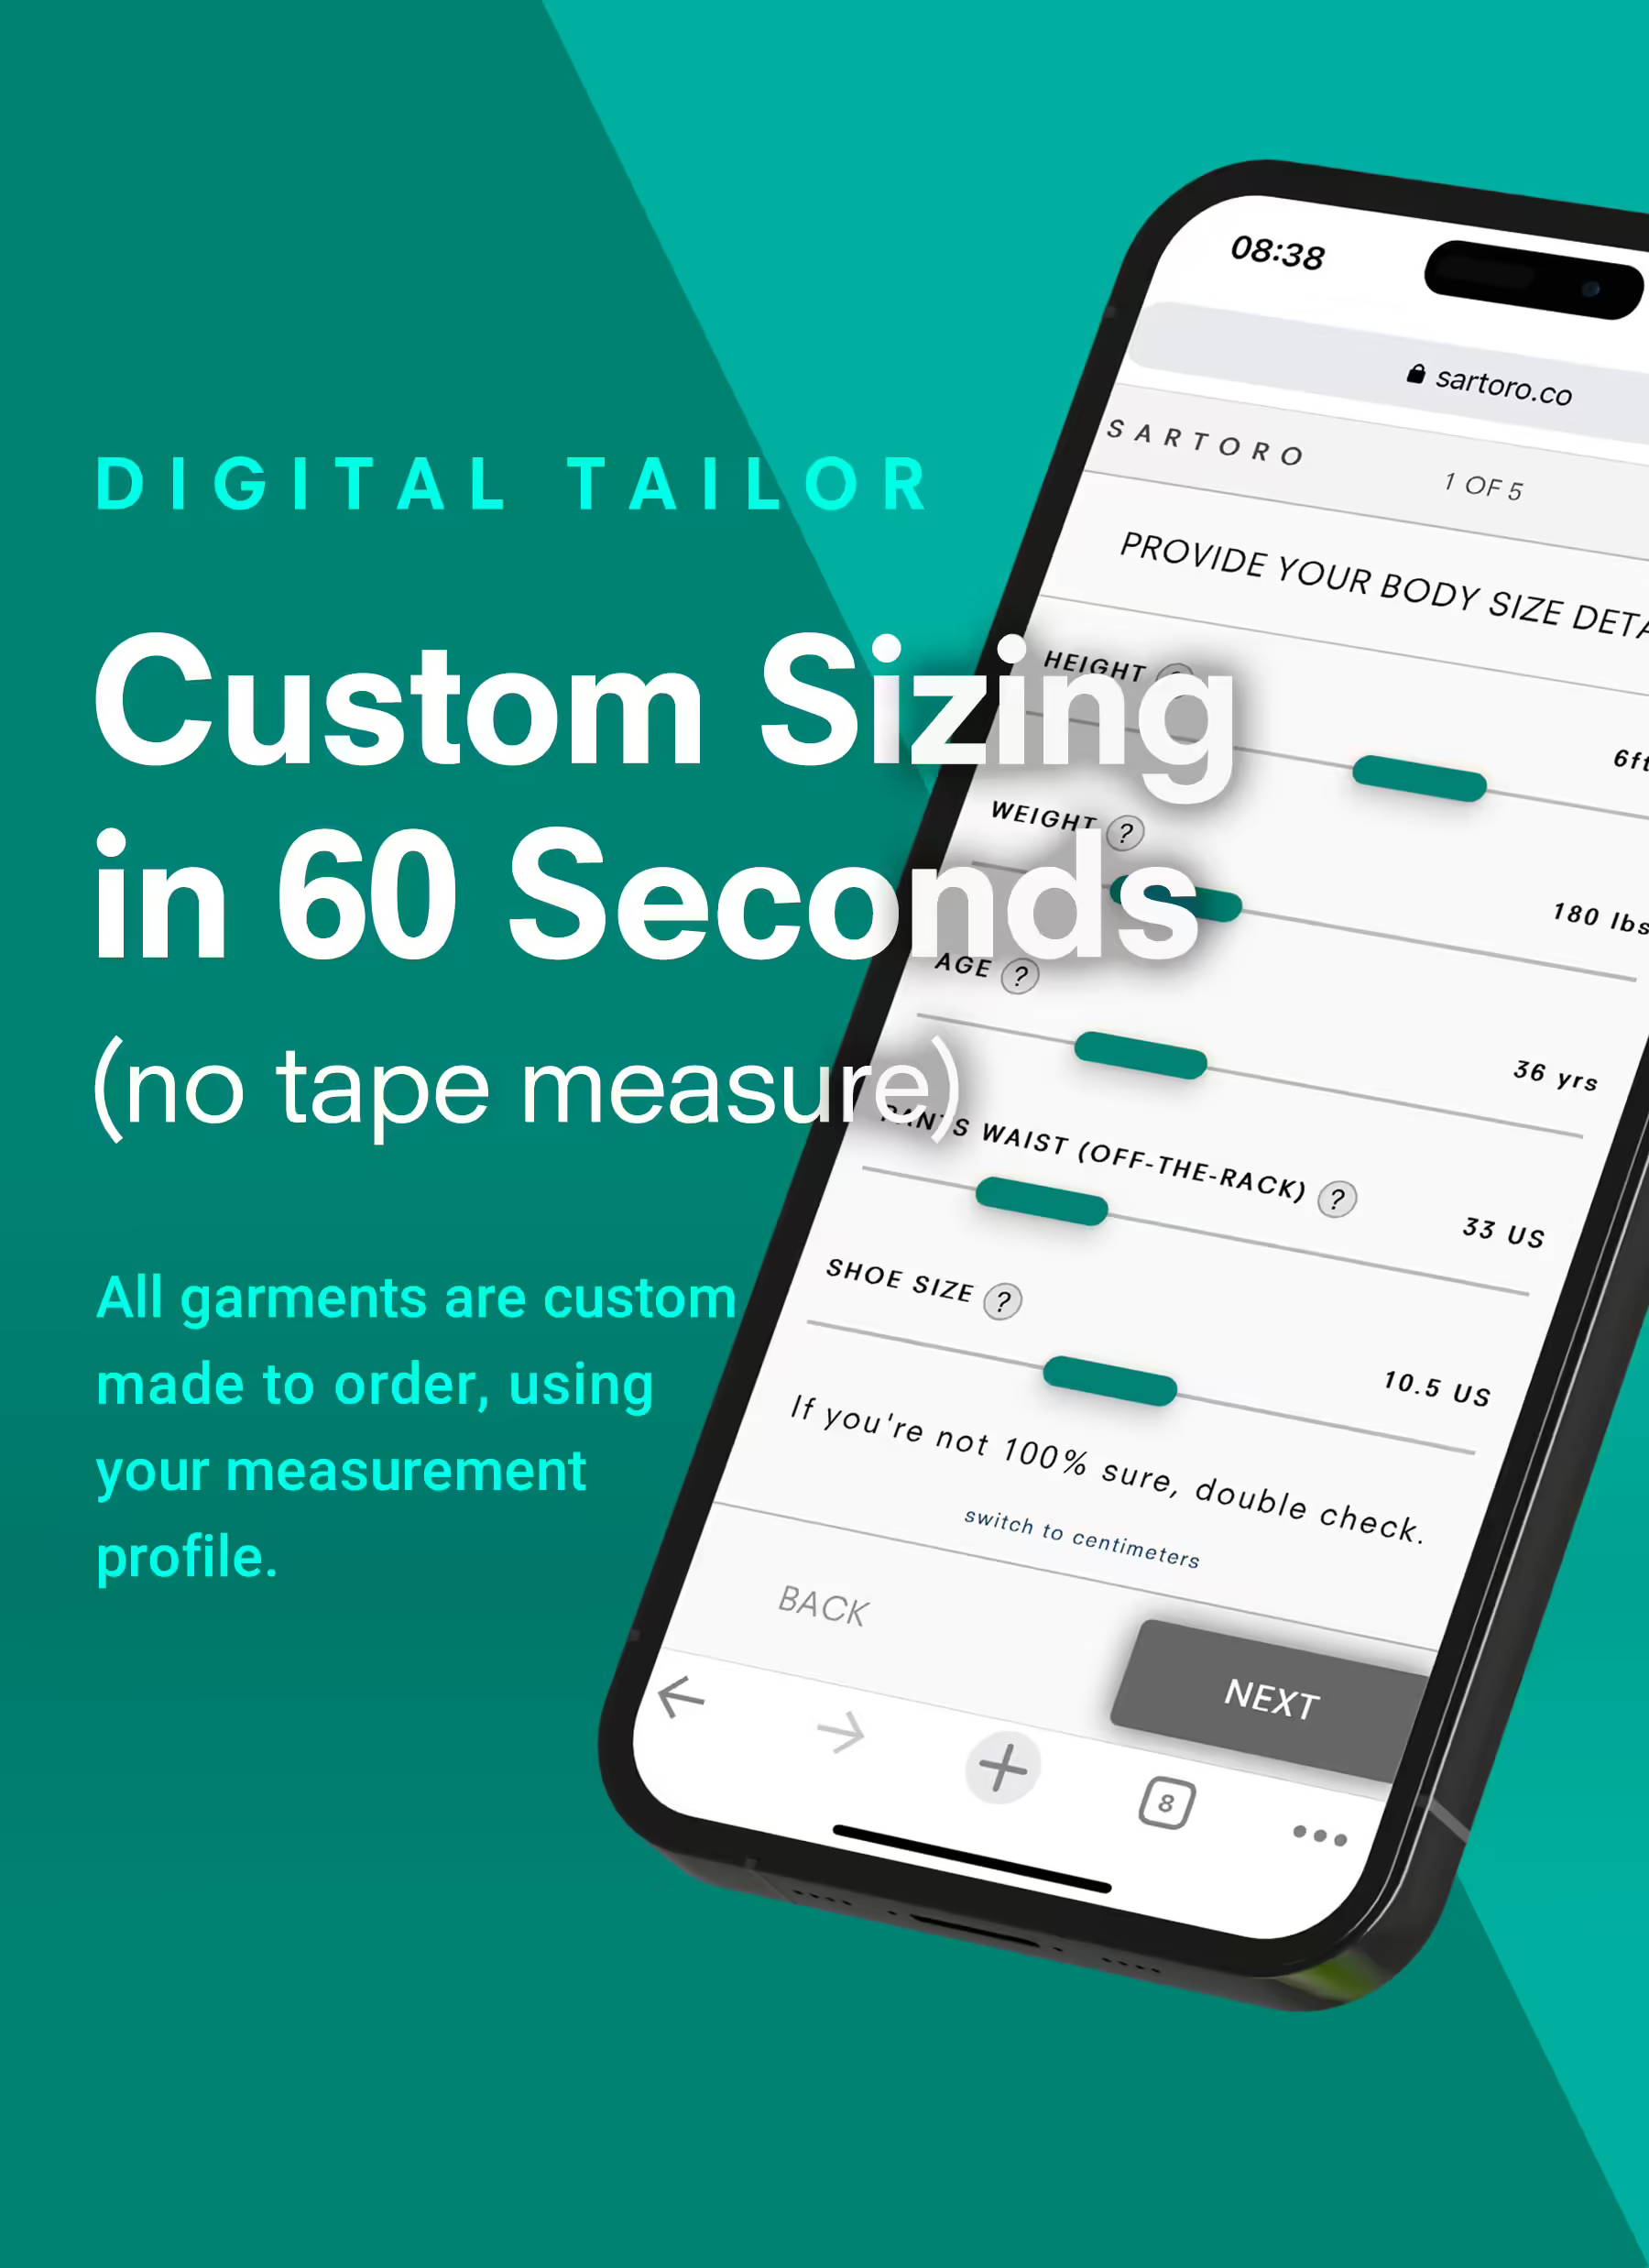 Digital Tailor - Custom Sizing in 60 Seconds